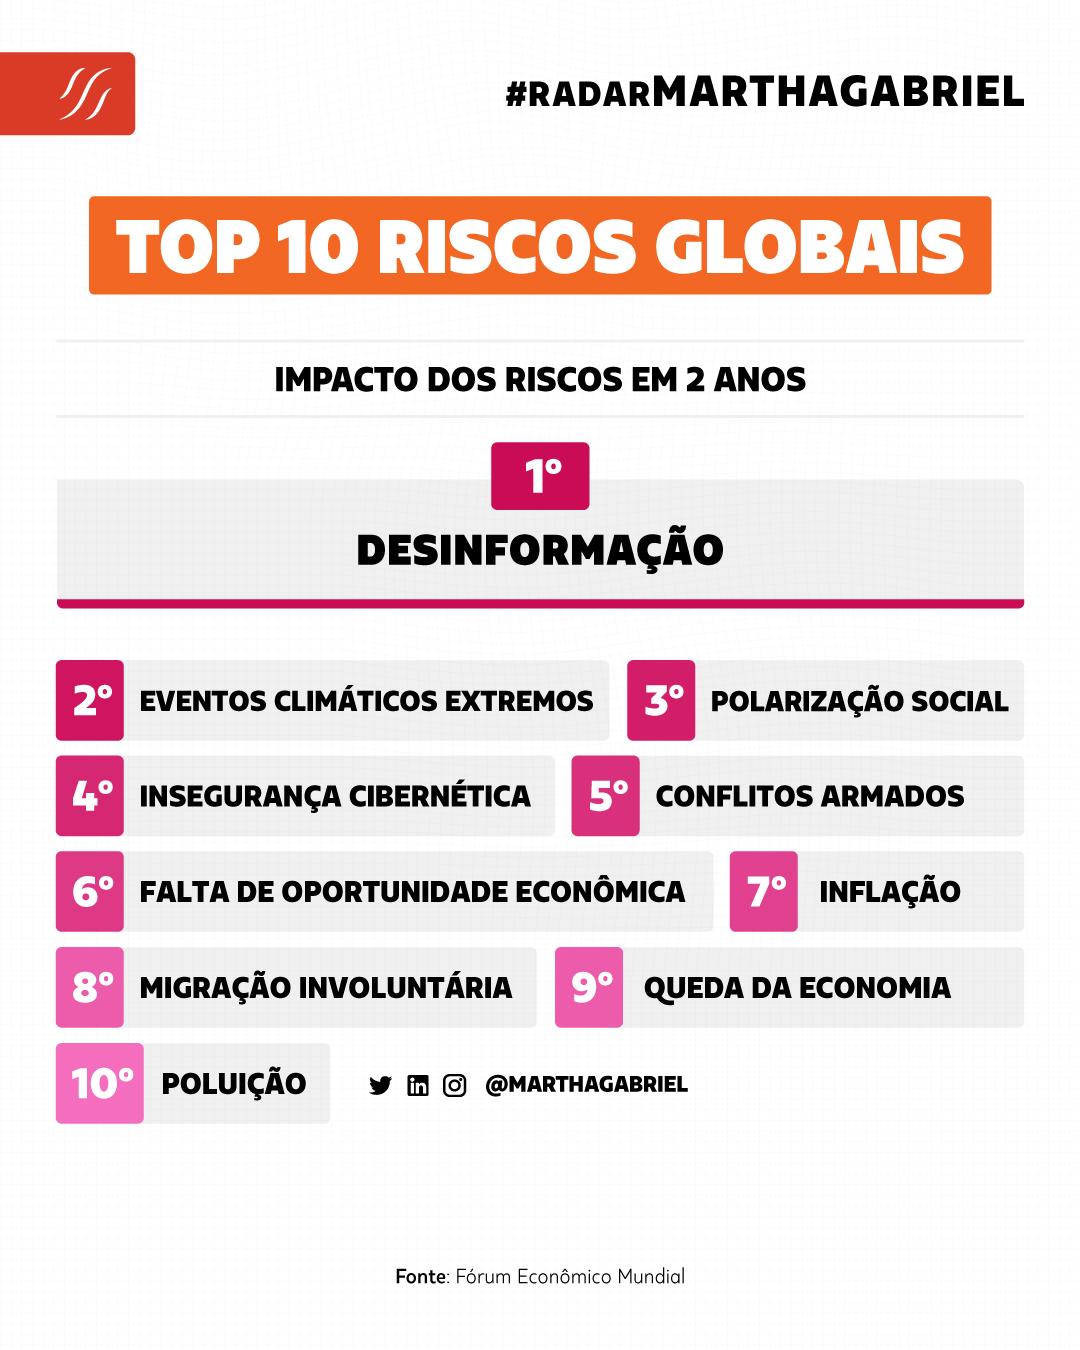 Top 10 Riscos Globais